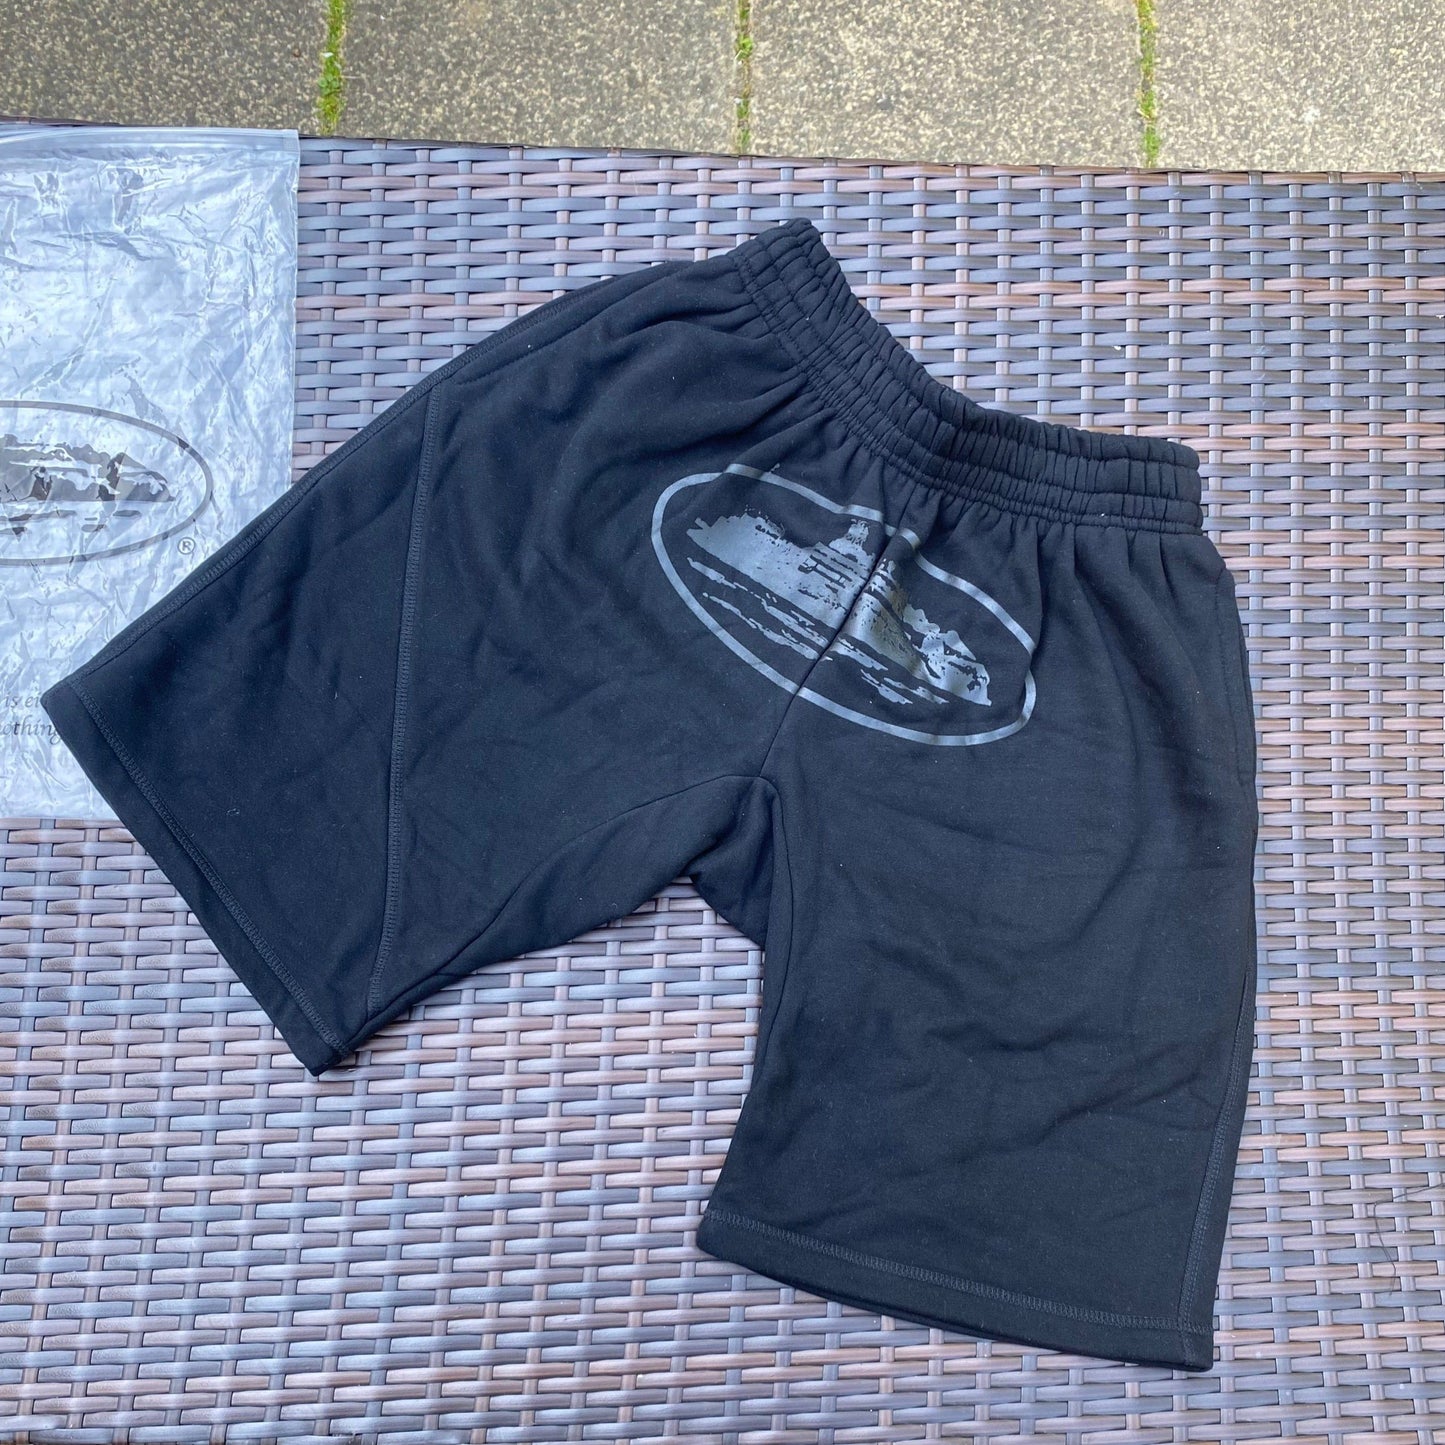 Corteiz Triple Black "Alcatraz" Shorts